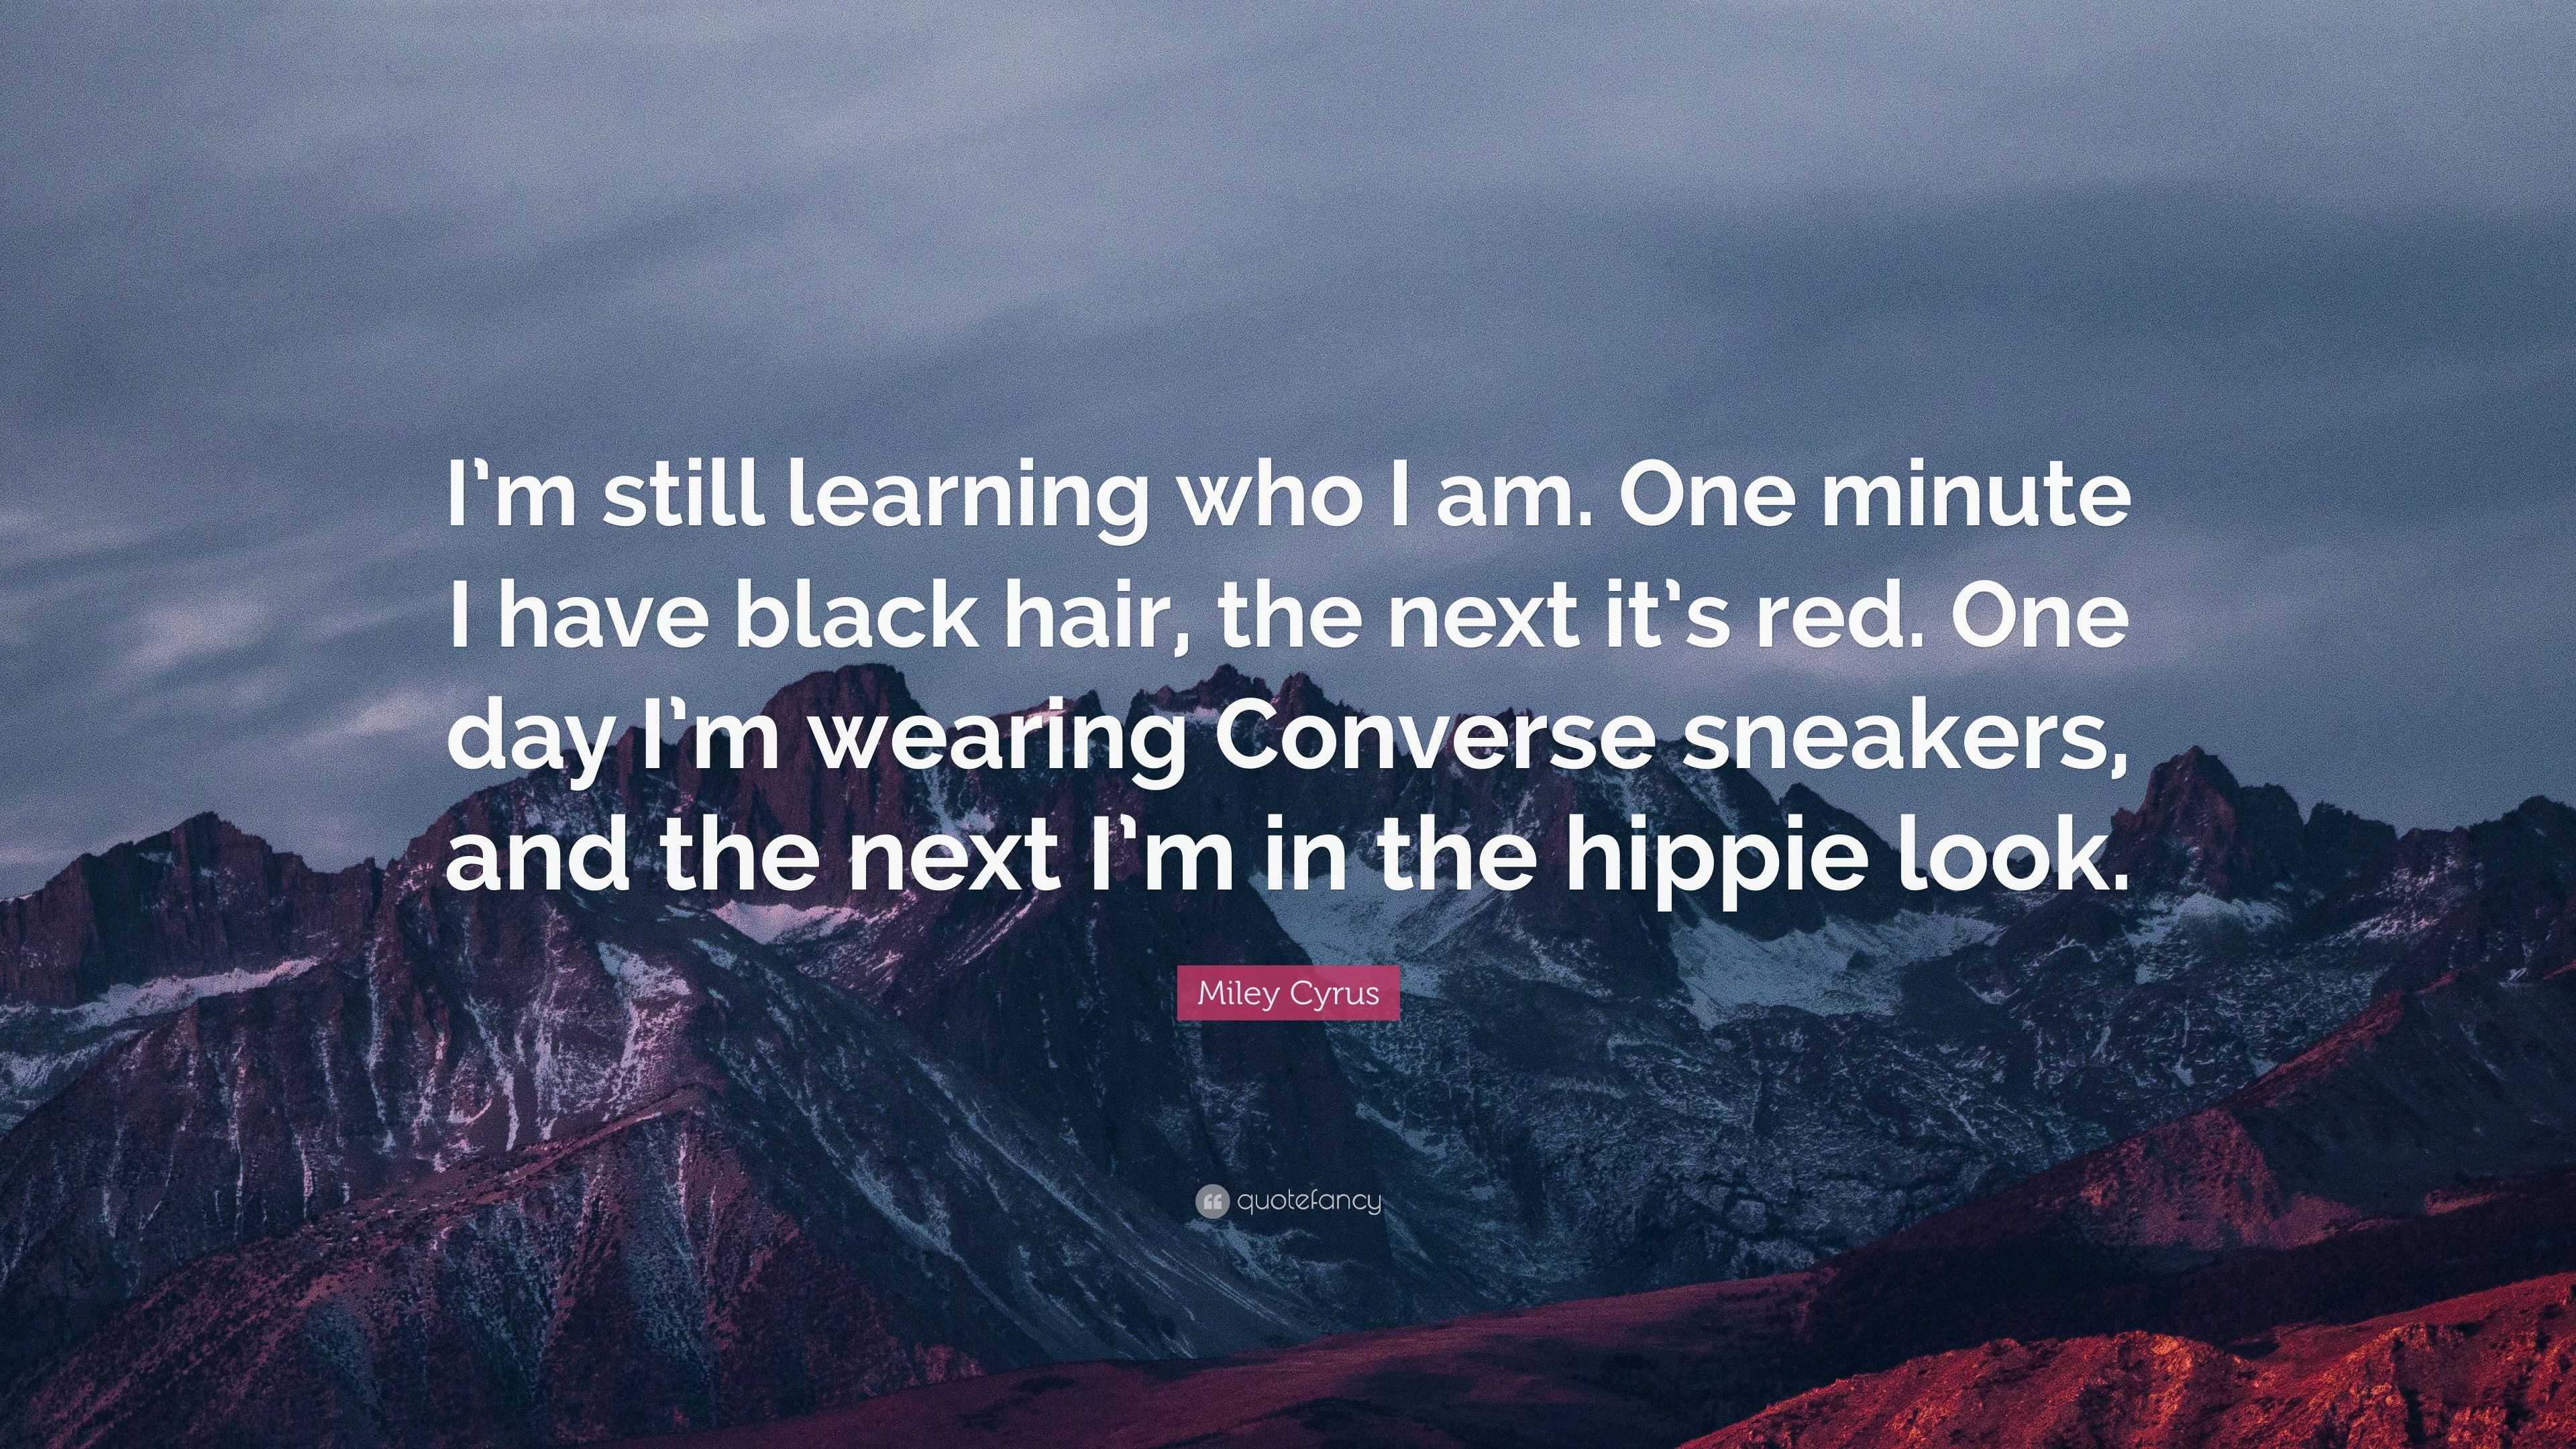 did hippies wear converse